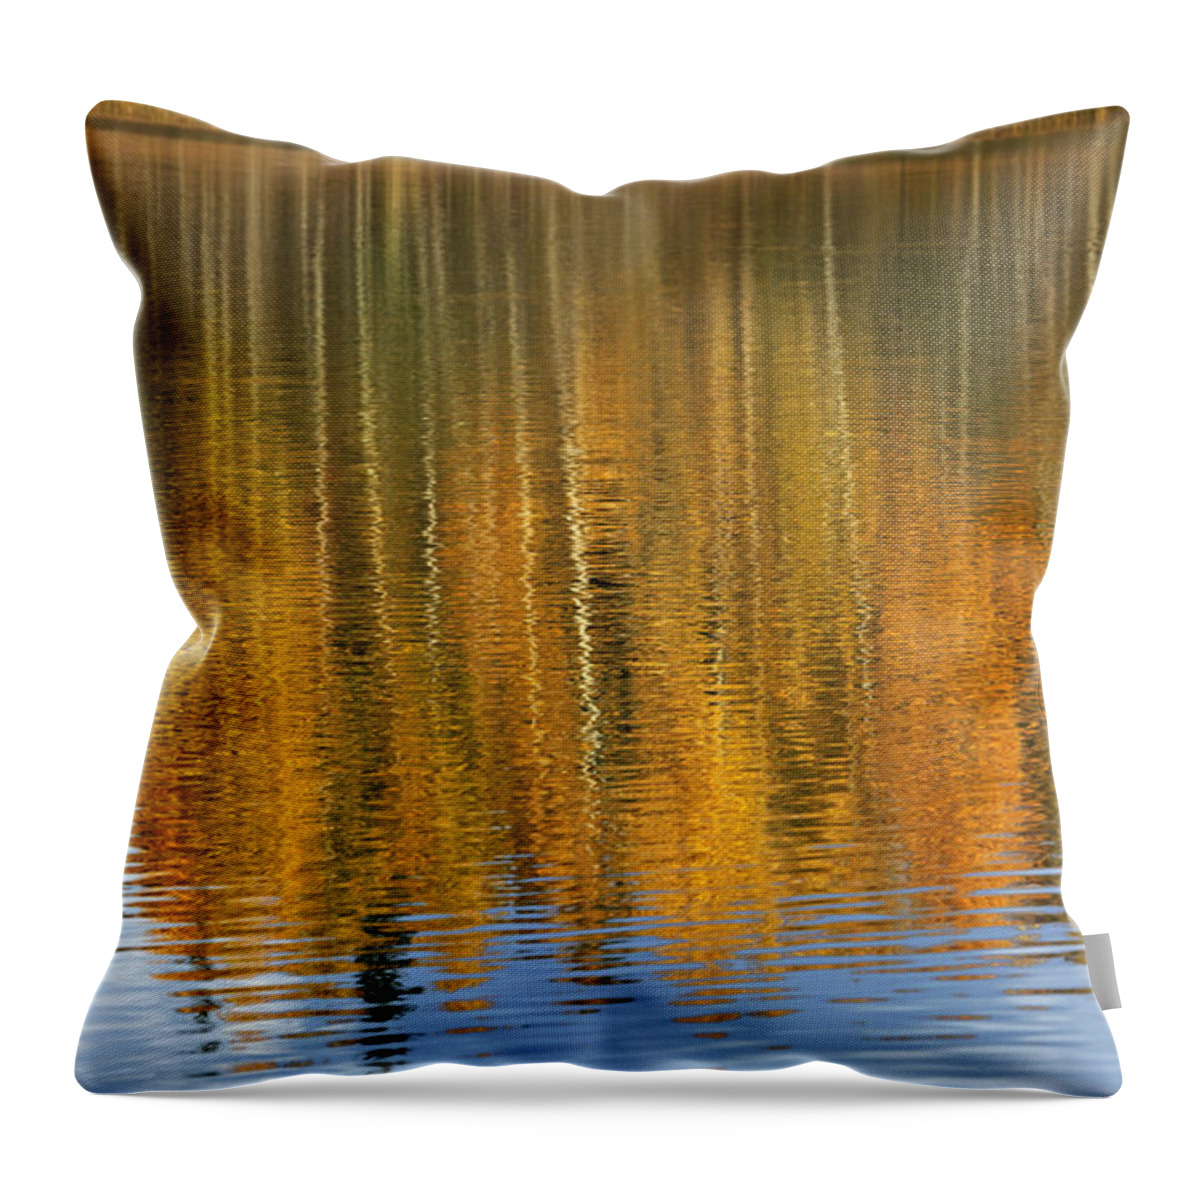 Autumn Throw Pillow featuring the photograph Autumn tree reflections by Elvira Butler